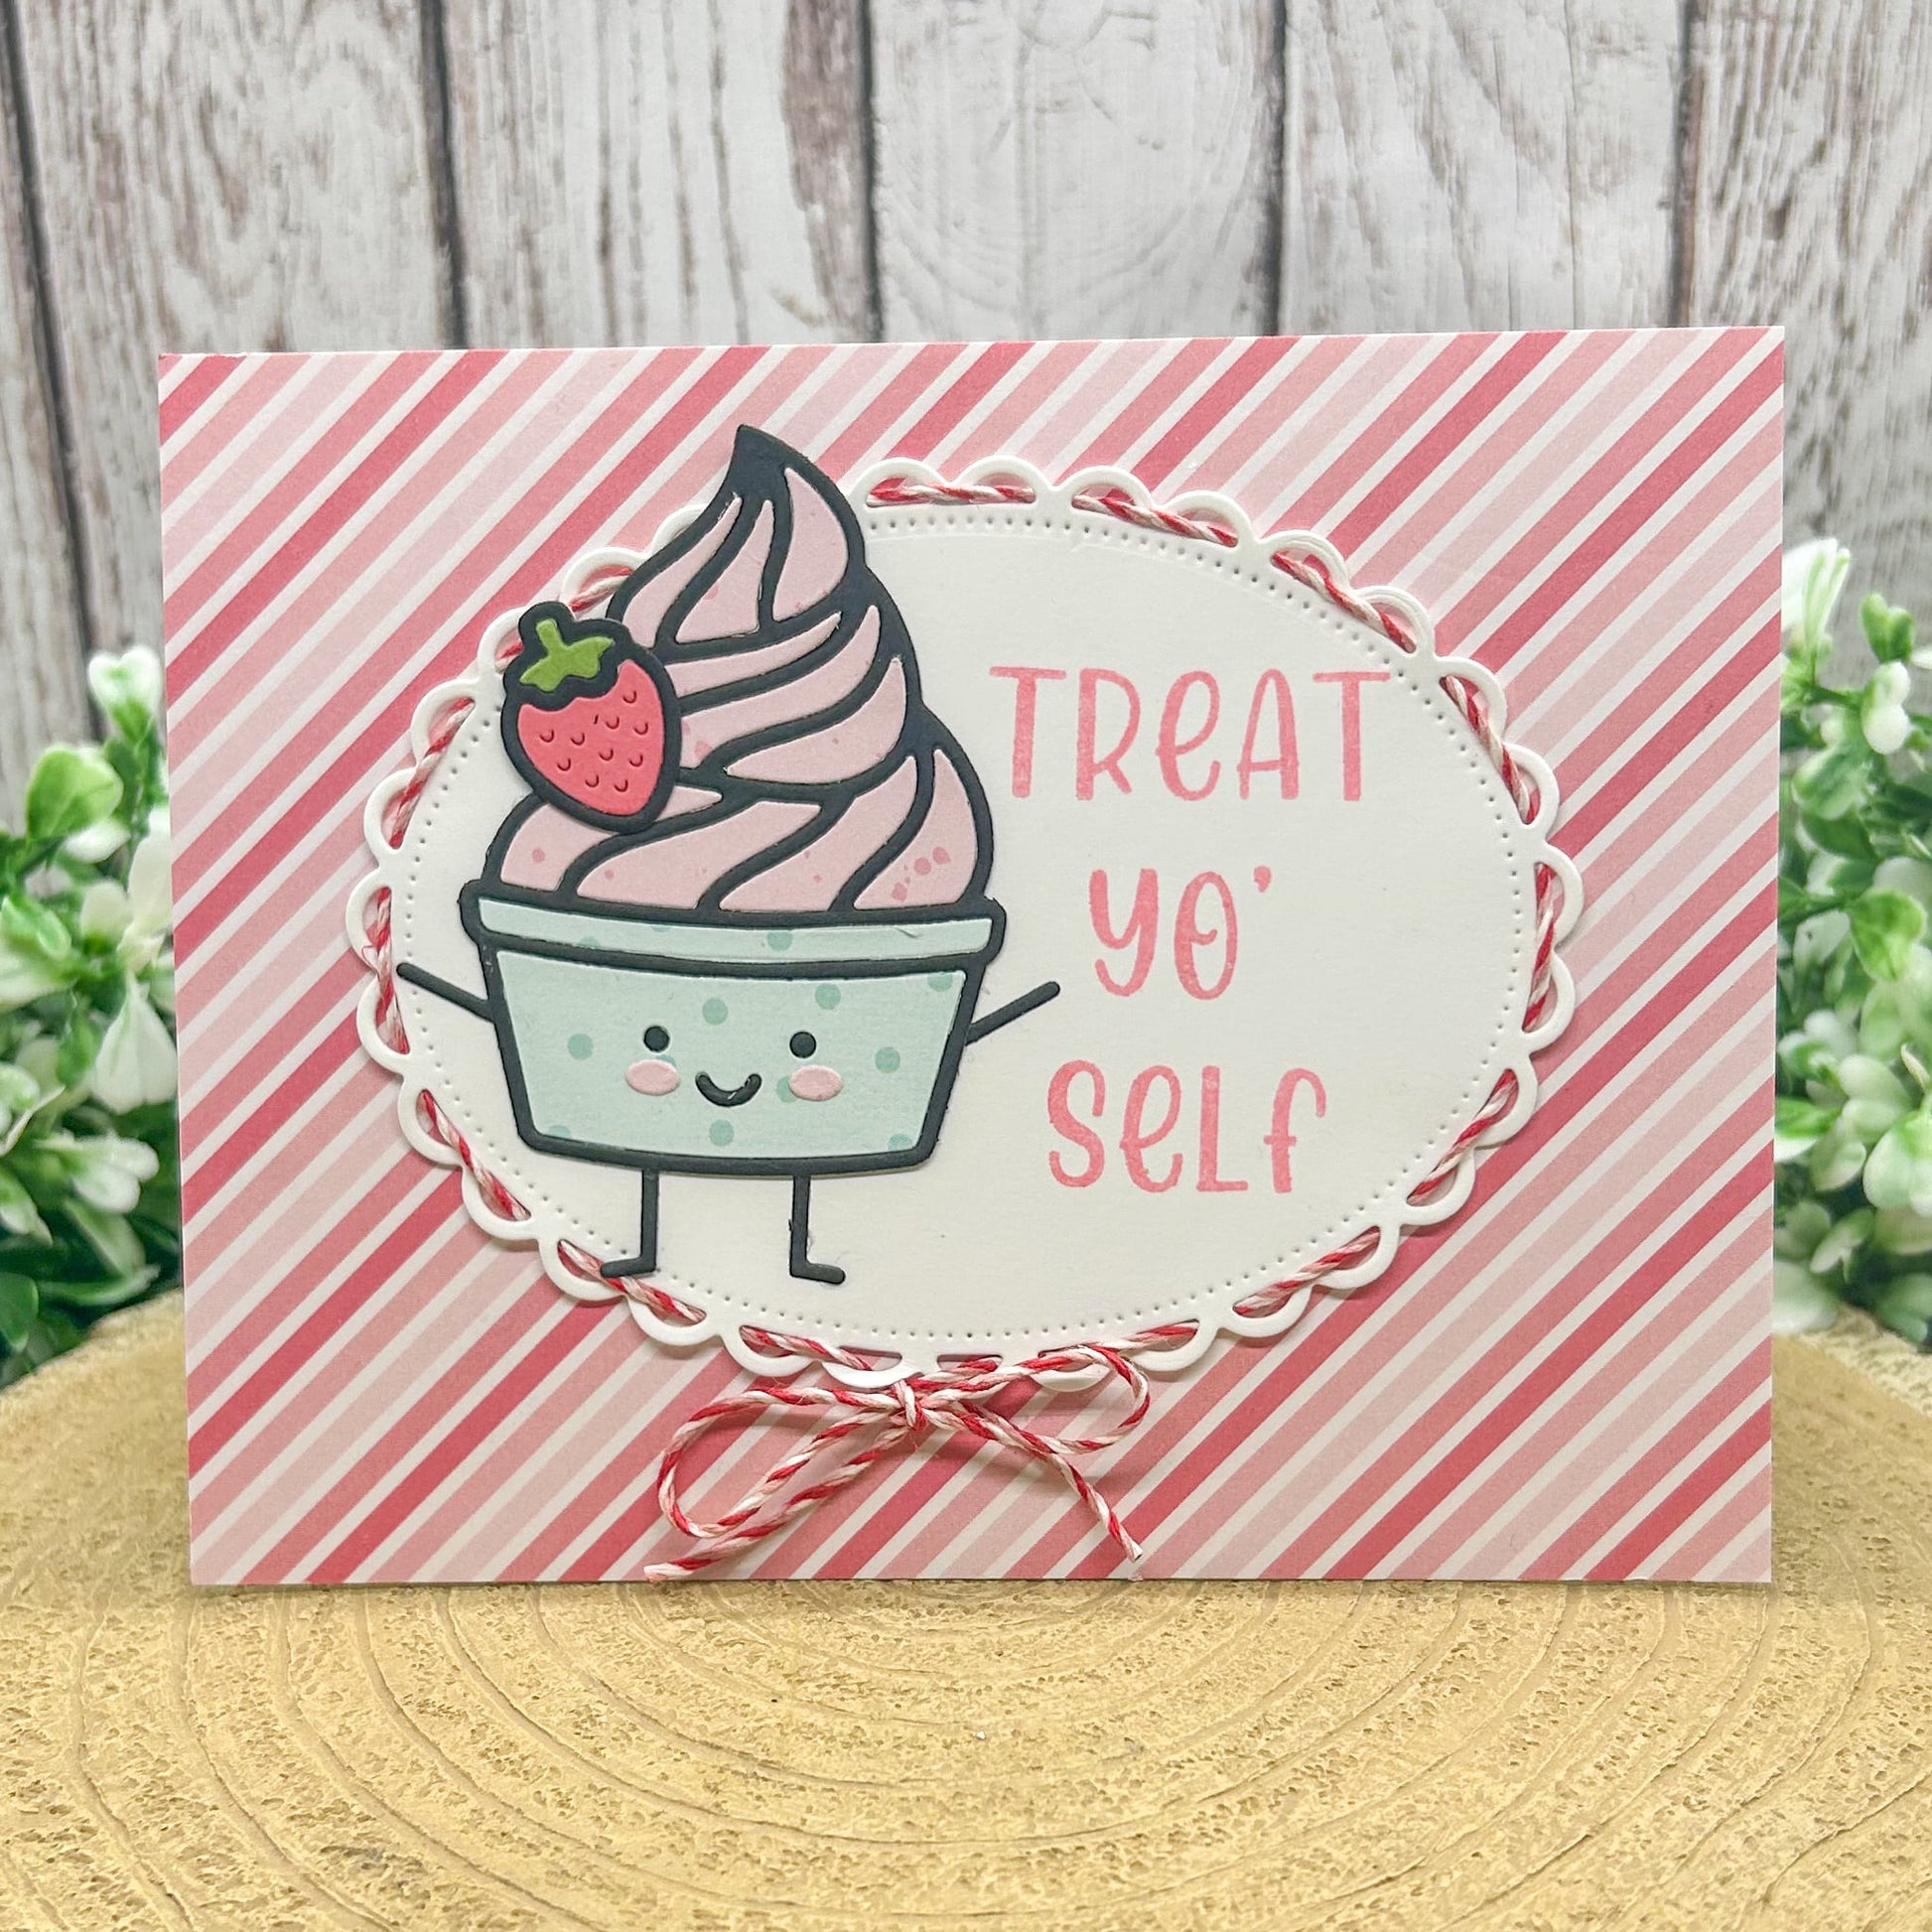 Treat Yo' Self! Handmade Birthday Card